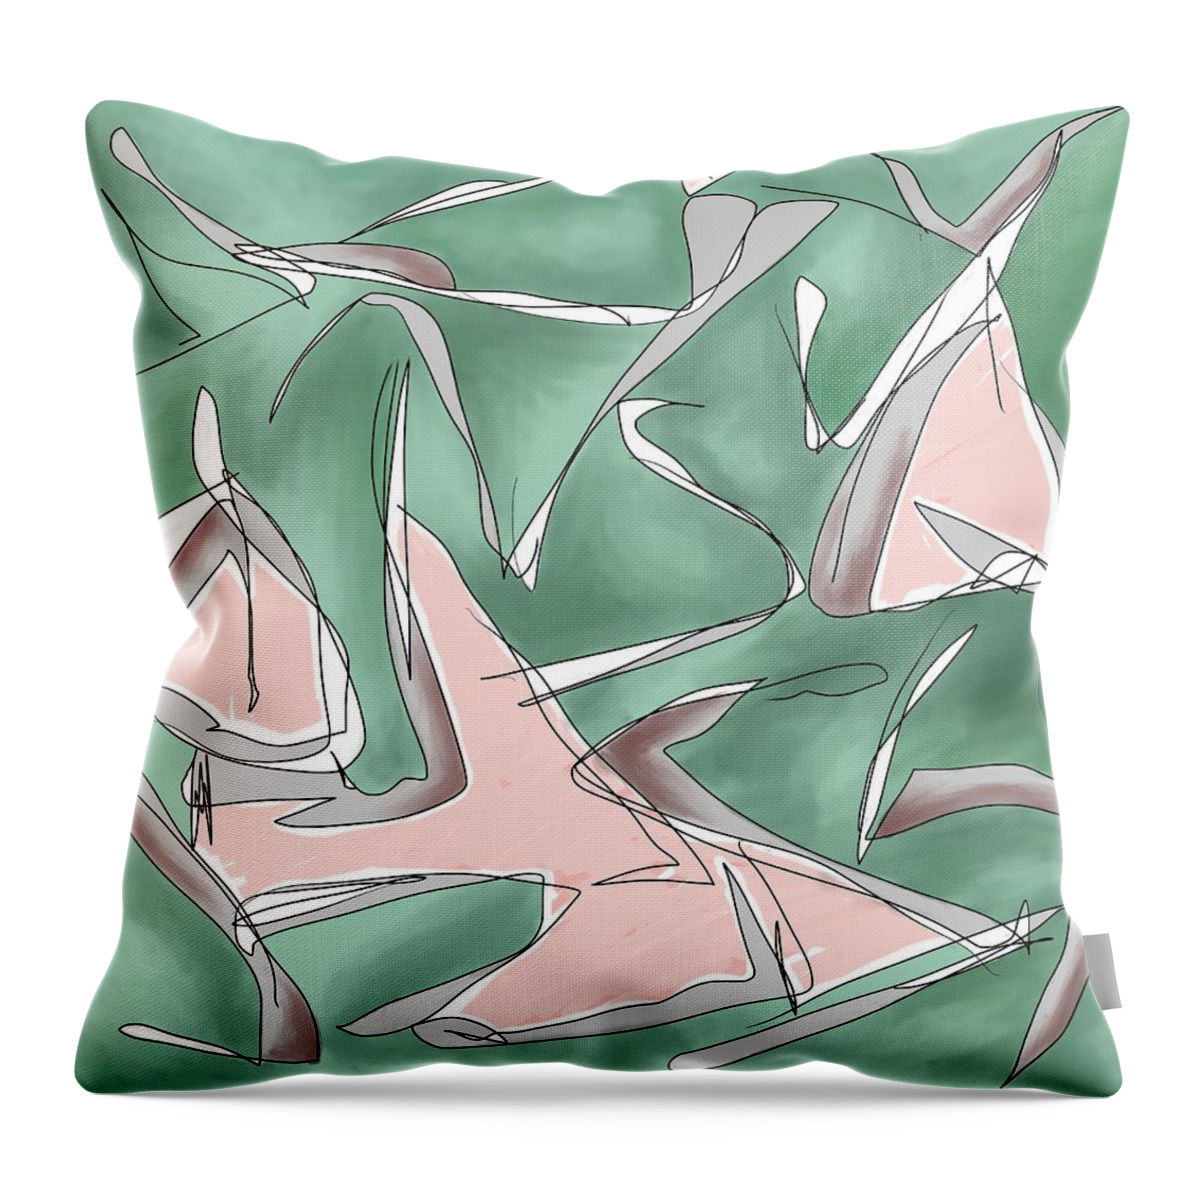 Abstract Throw Pillow featuring the digital art Daddy's Little Gull by Laureen Murtha Menzl